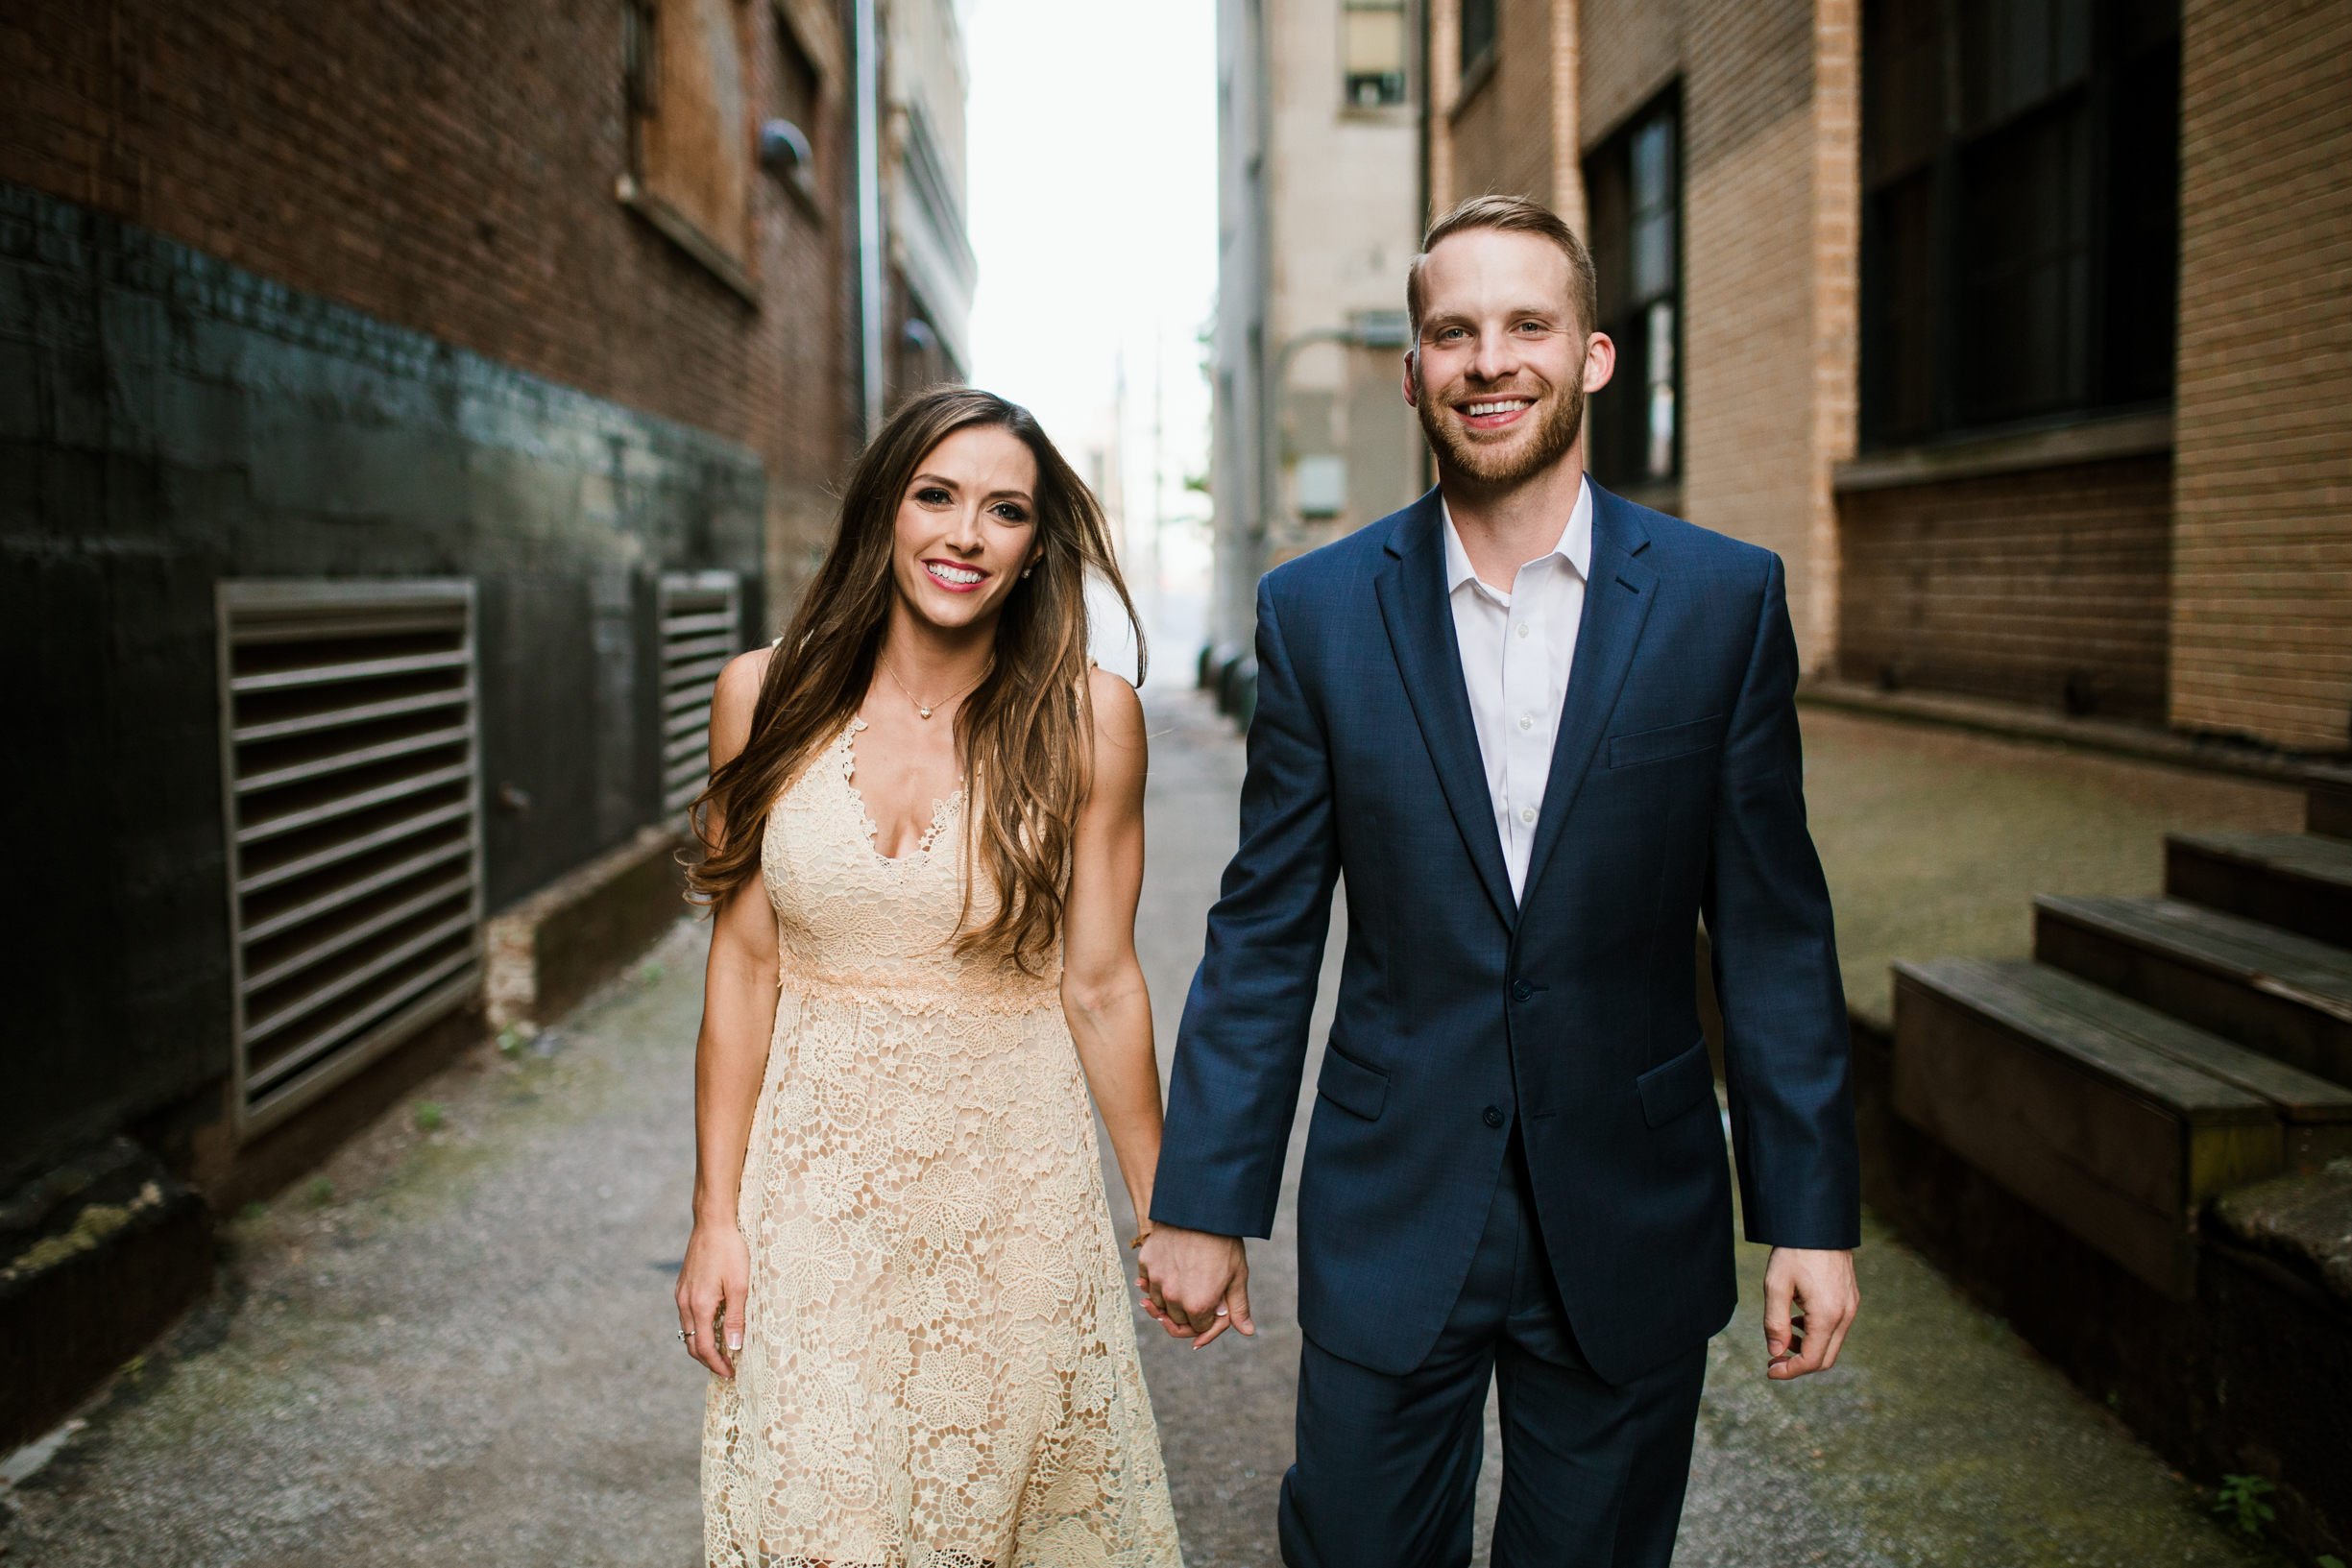 Victoria & Chad Engagement 2018 Crystal Ludwick Photo Louisville Kentucky Wedding Photographer WEBSITE (5 of 48).jpg